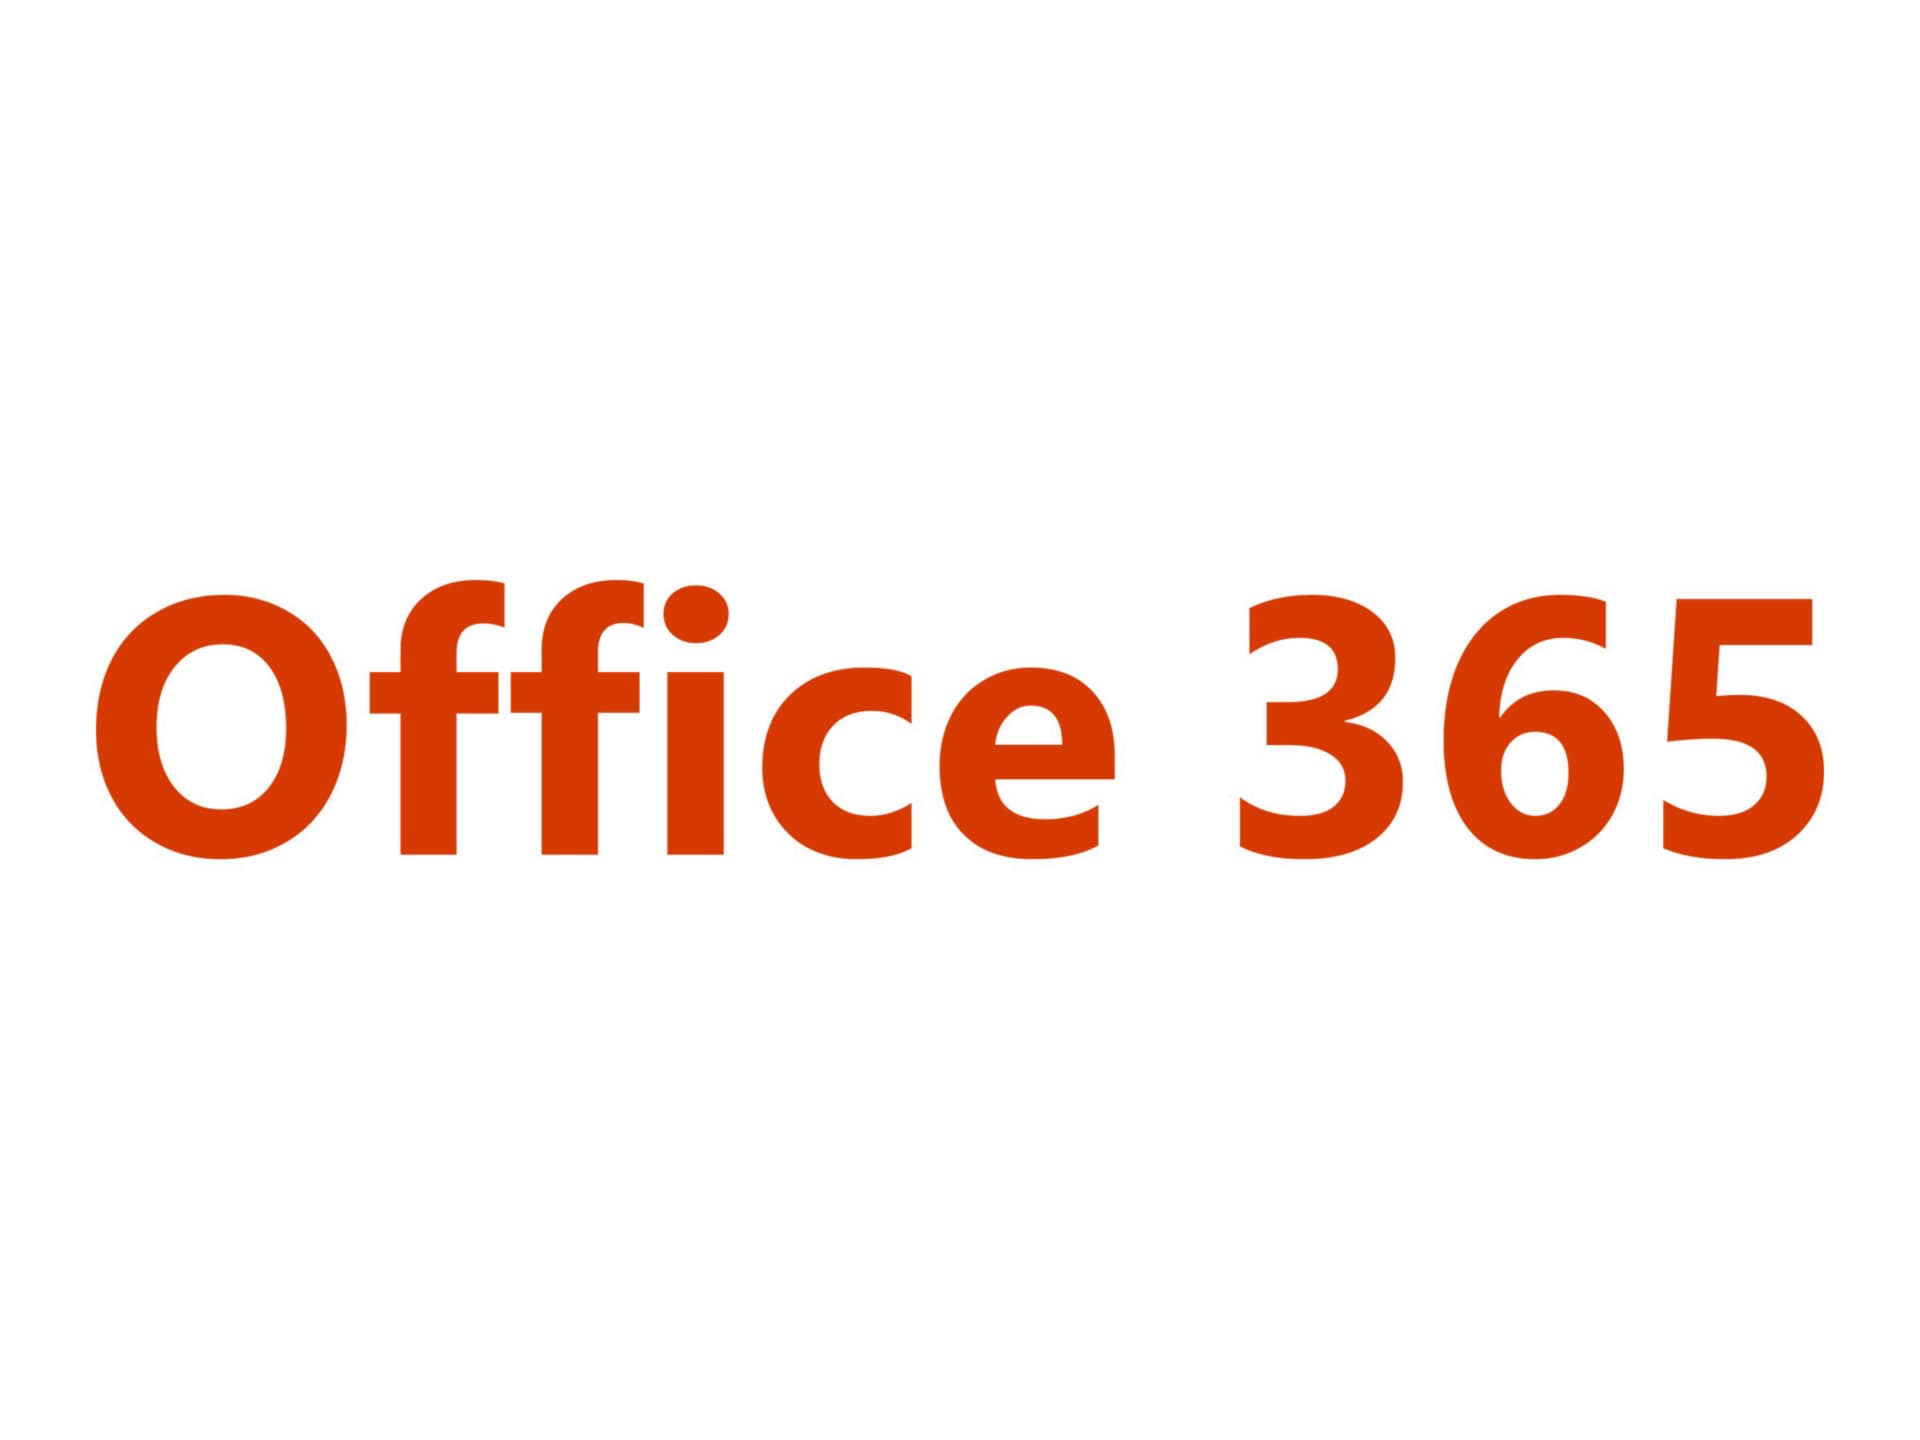 Microsoft Office 365 Enterprise E3 - subscription license (12 month) -1 usr